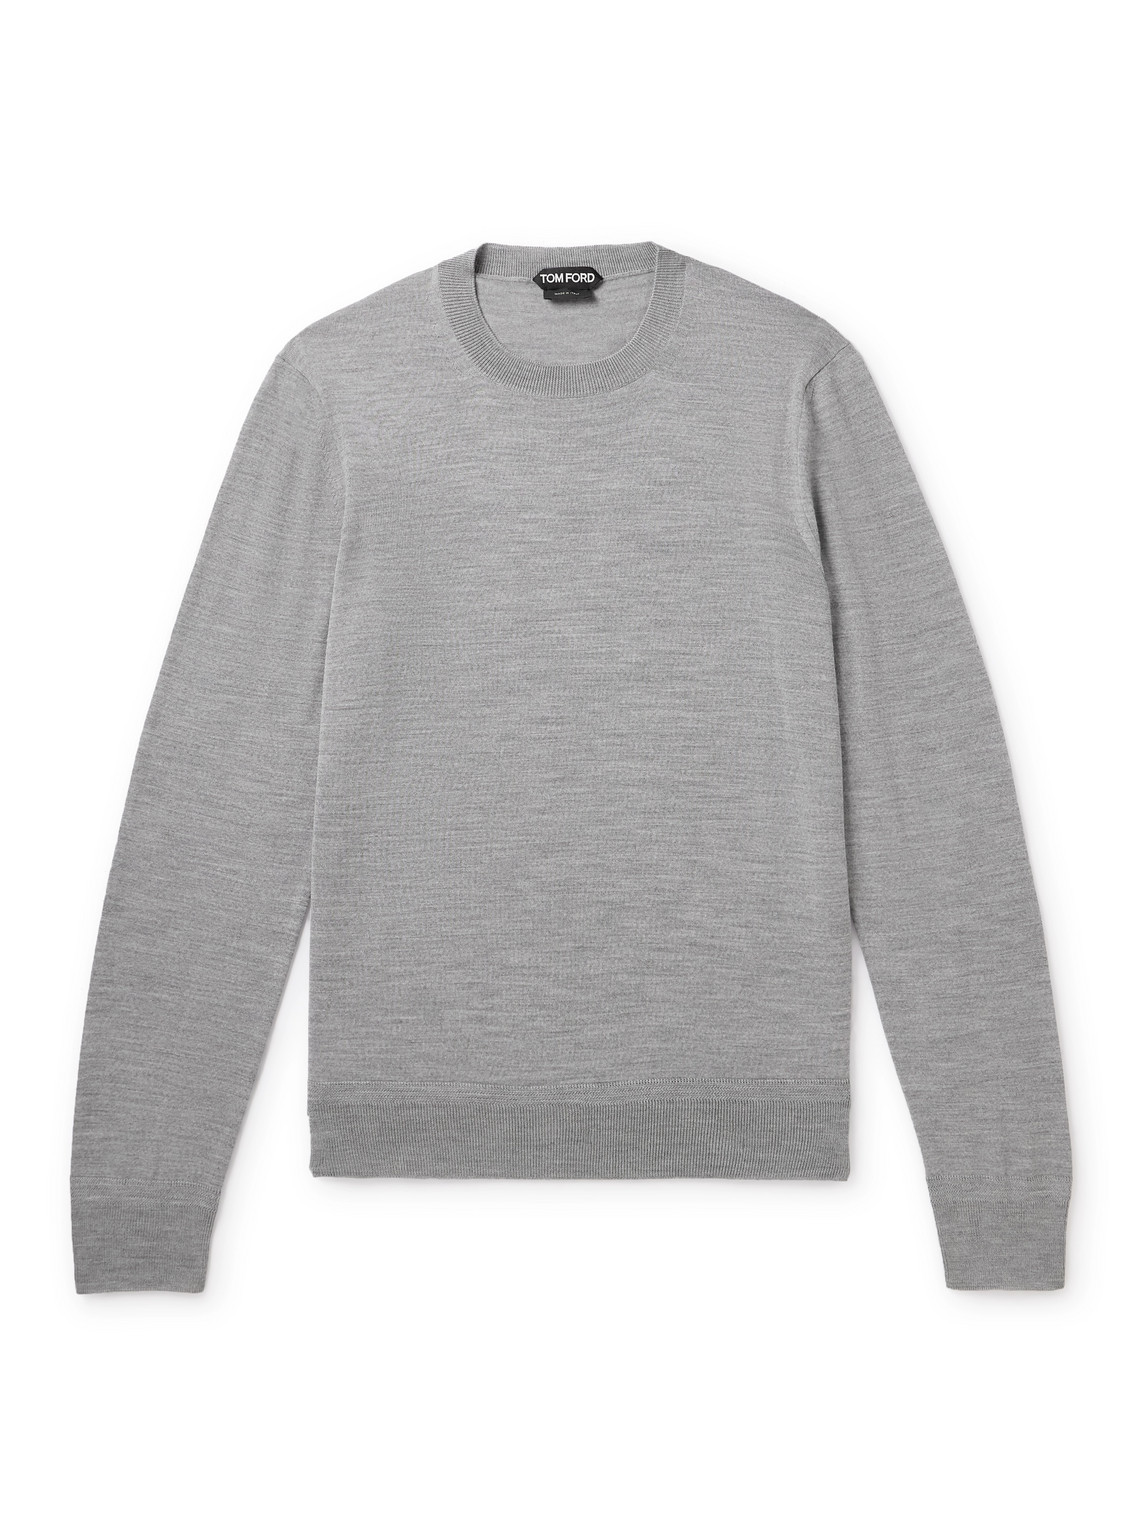 TOM FORD - Wool Sweater - Men - Gray - IT 52 von TOM FORD